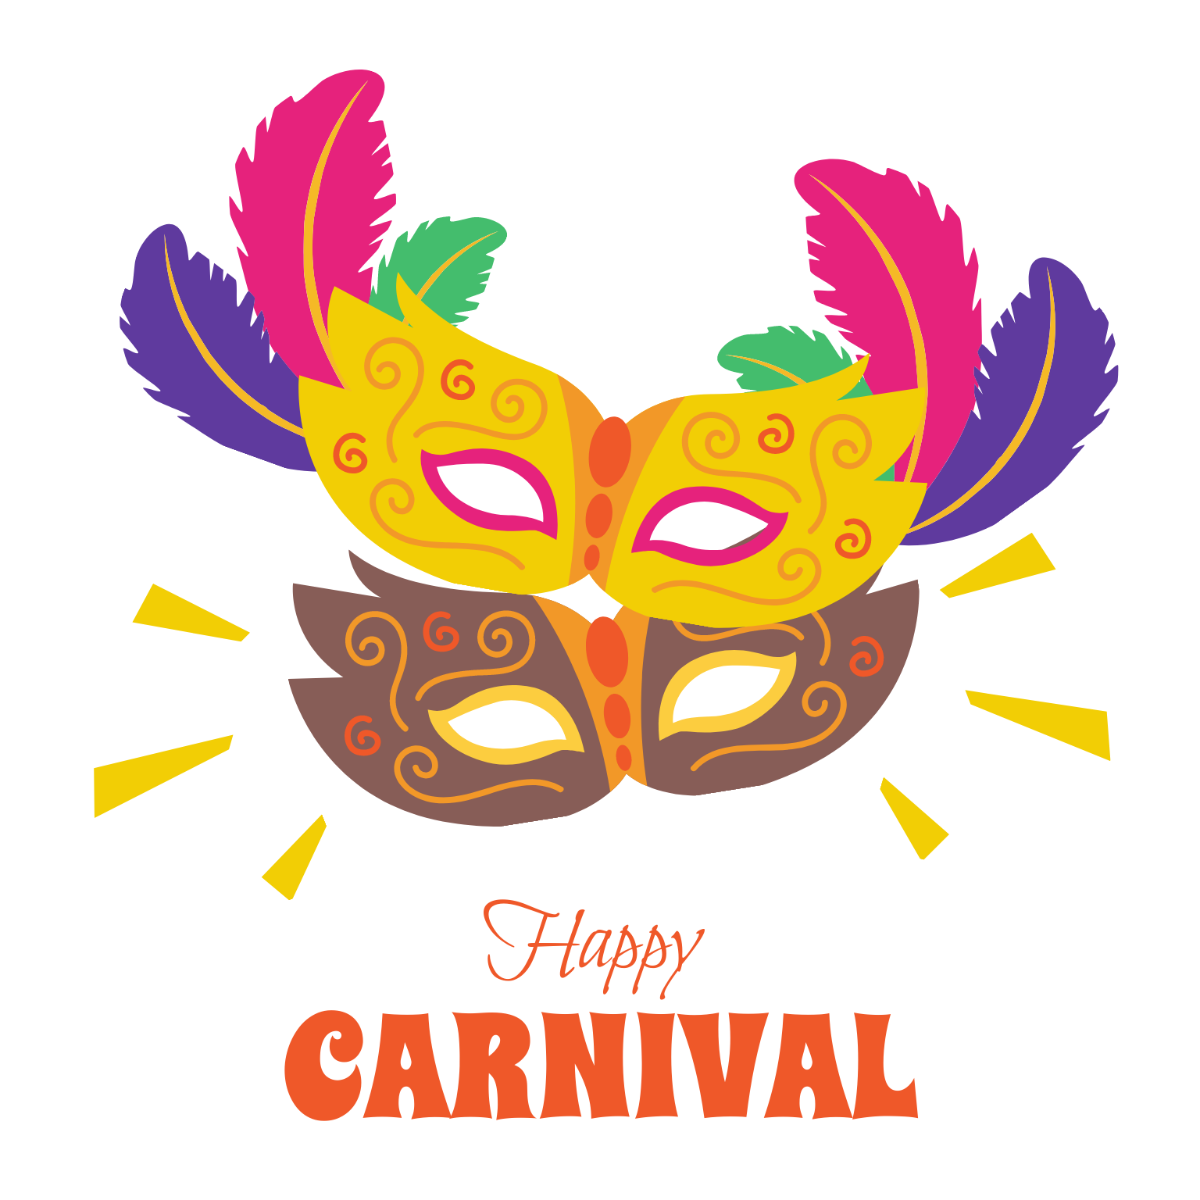 Carnival Festival Illustration Template